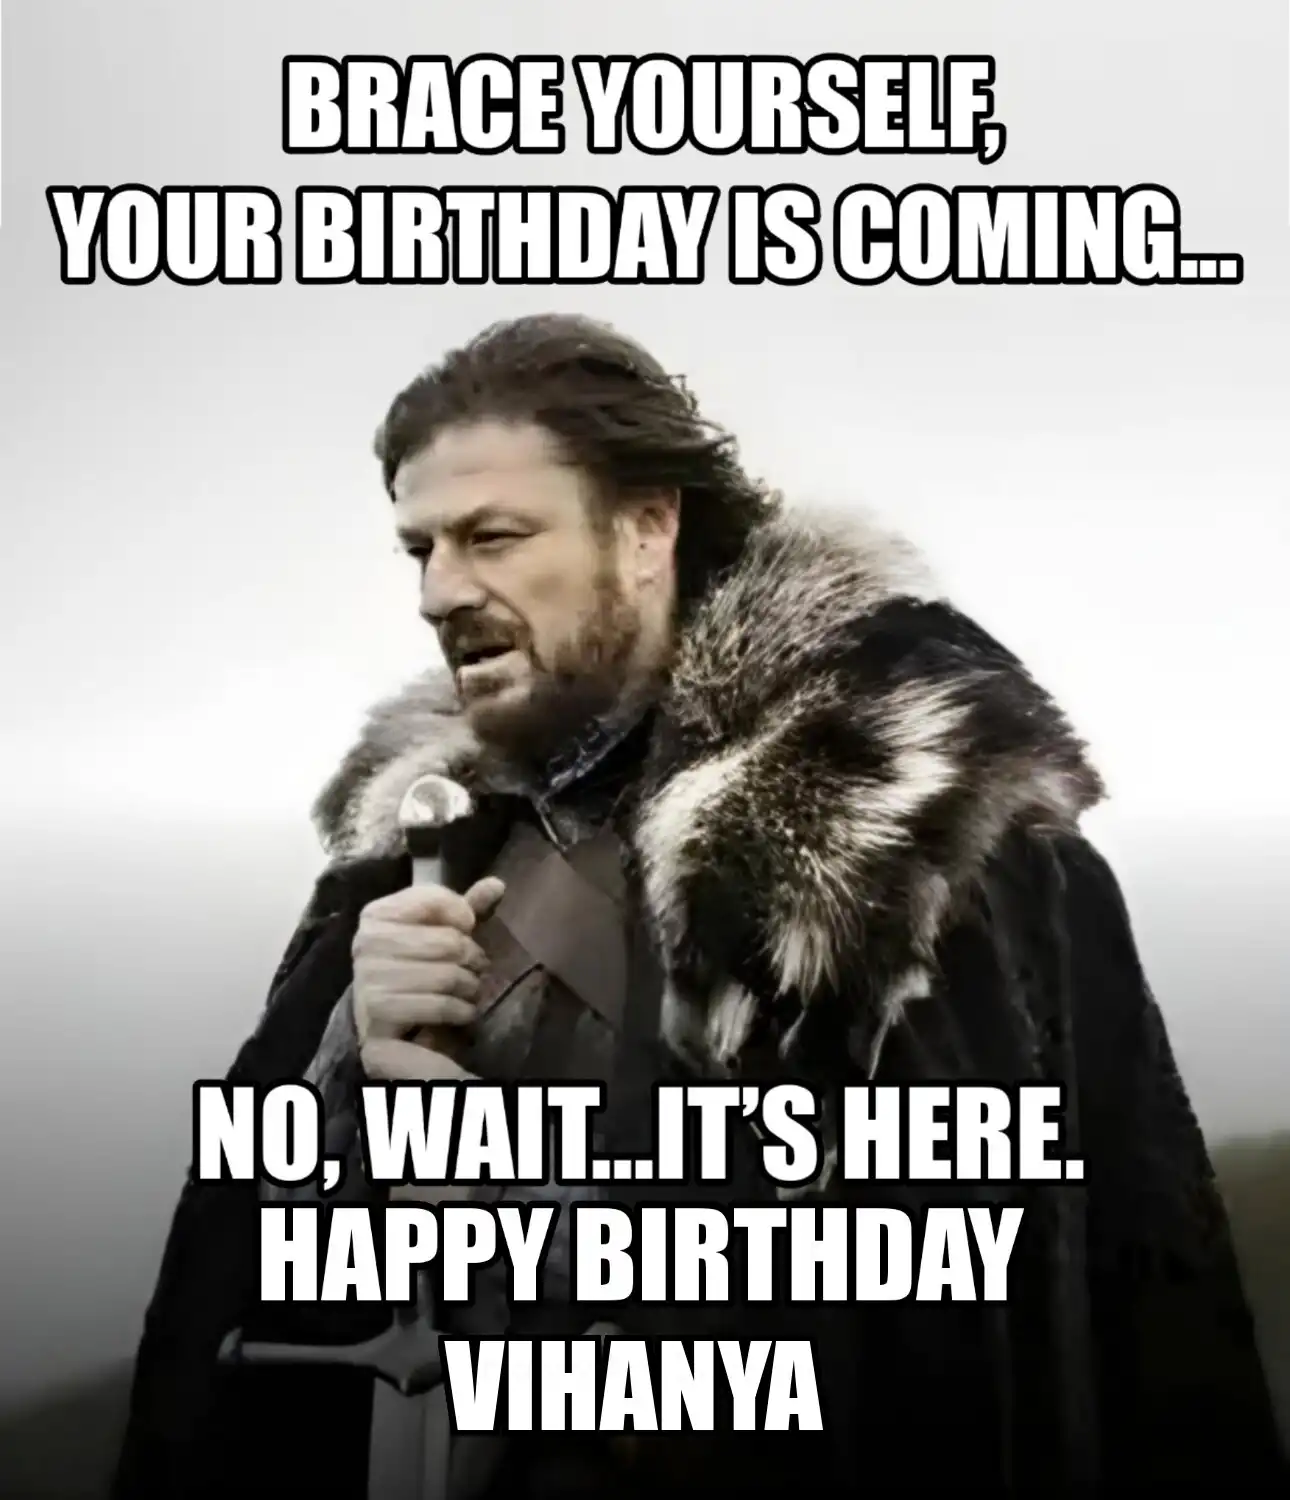 Happy Birthday Vihanya Brace Yourself Your Birthday Is Coming Meme